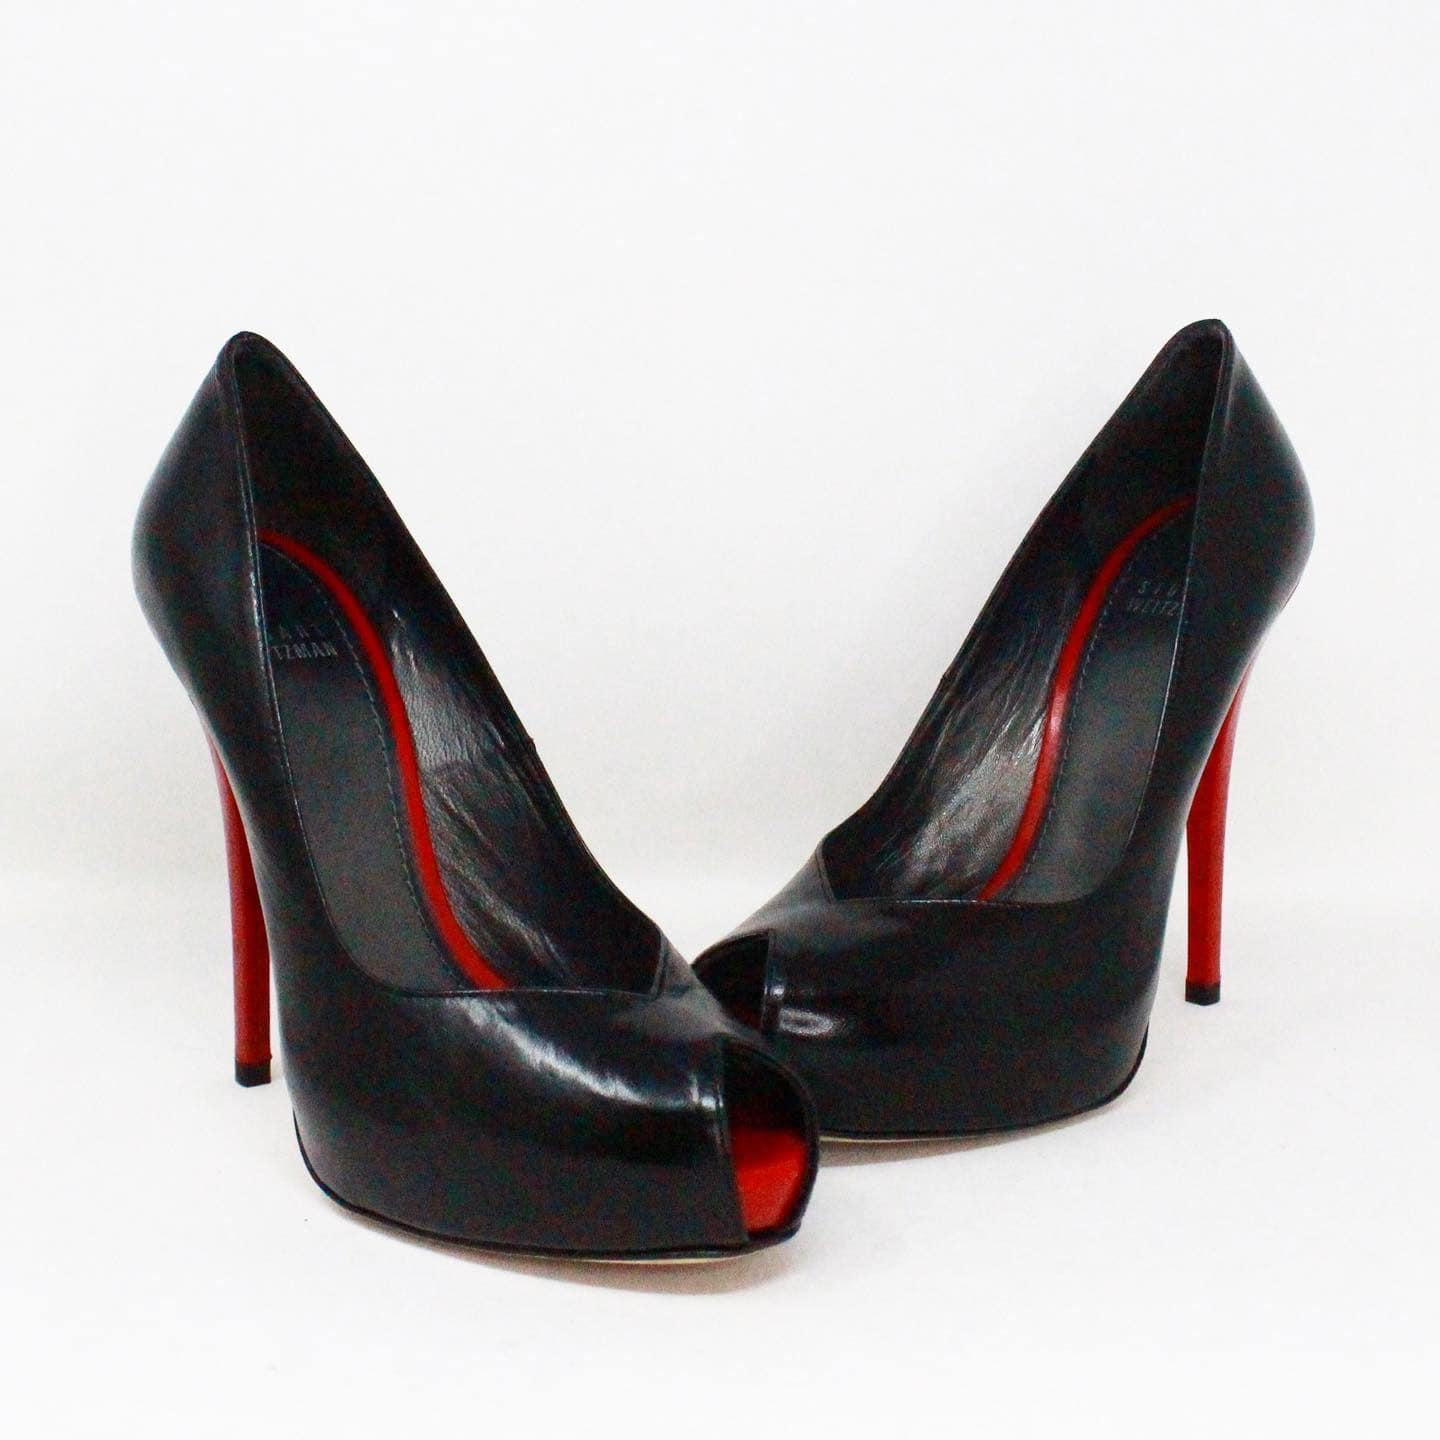 STUART WEITZMAN 37793 Black Leather Peep Toe Heels US 7.5 EU 37.5 A